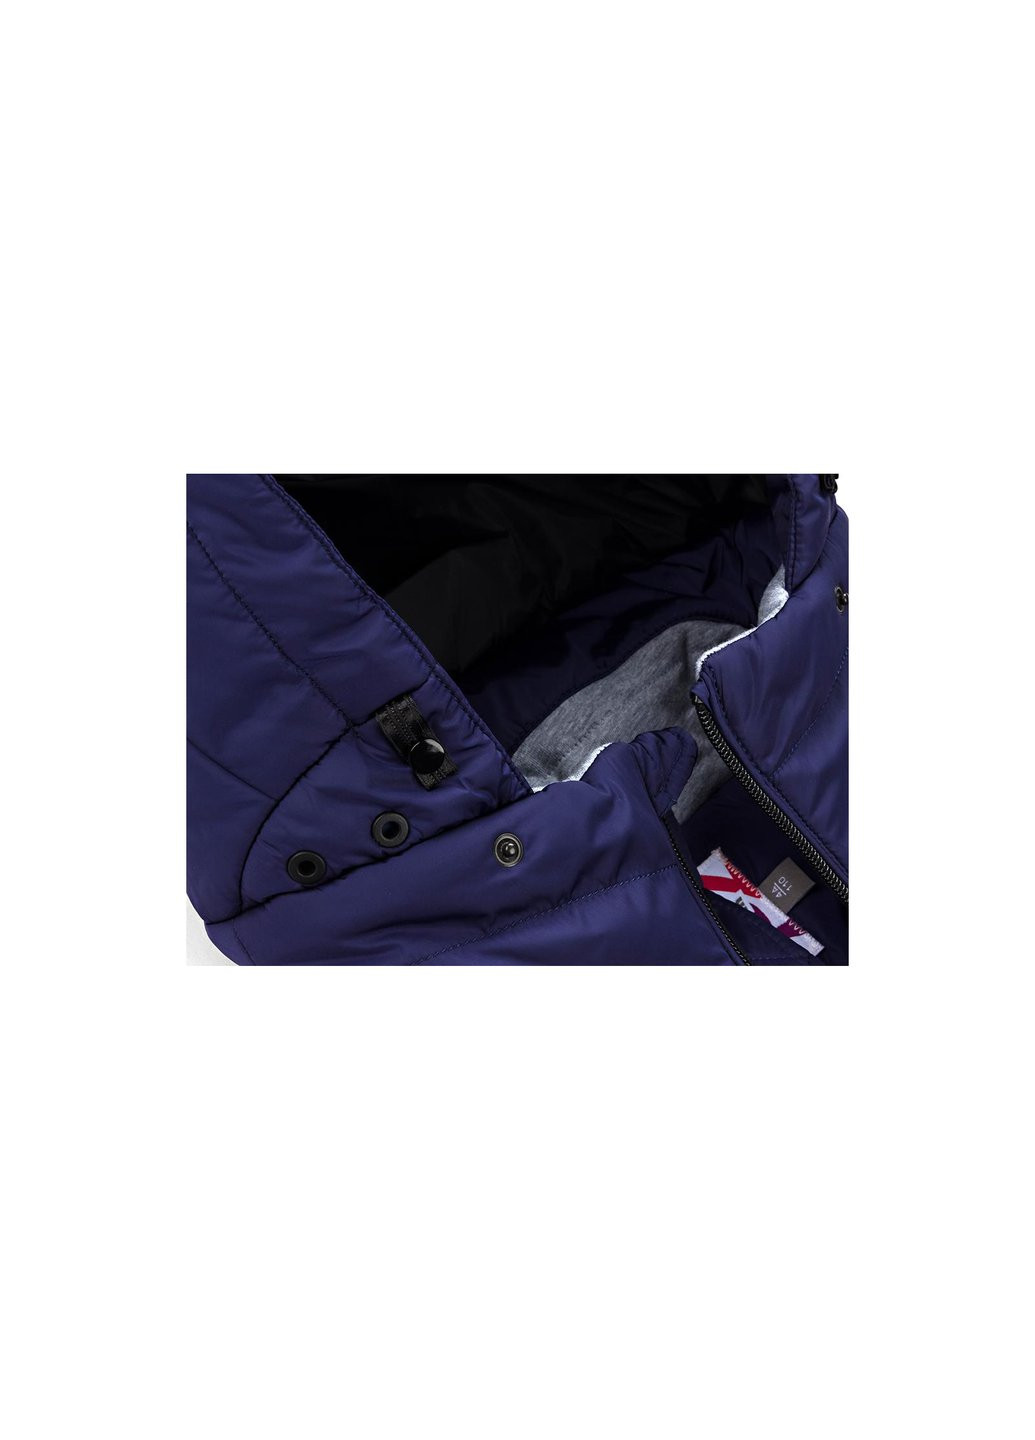 Блакитна демісезонна куртка з капюшоном (sicmy-g306-110b-blue) Snowimage